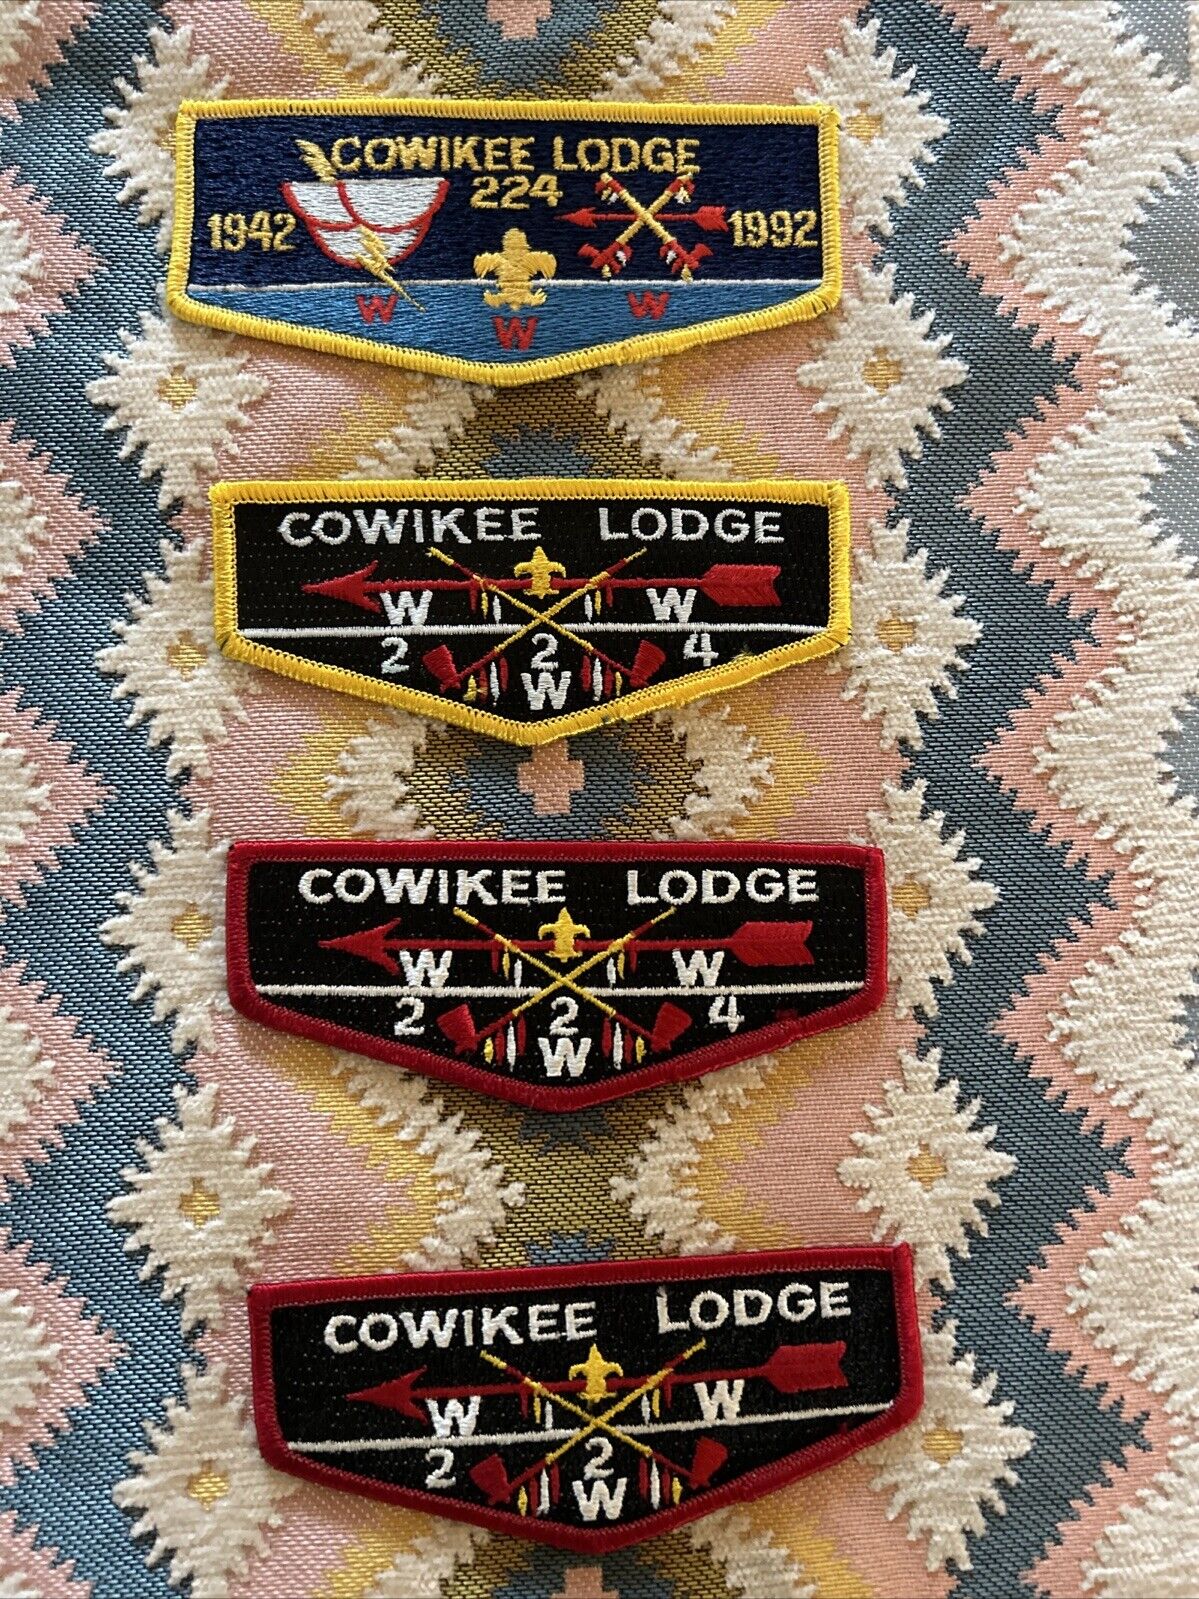 Lodge 224 Cowikee OA Flap Order of the Arrow Boy Scouts BSA-RARE MISPRINT